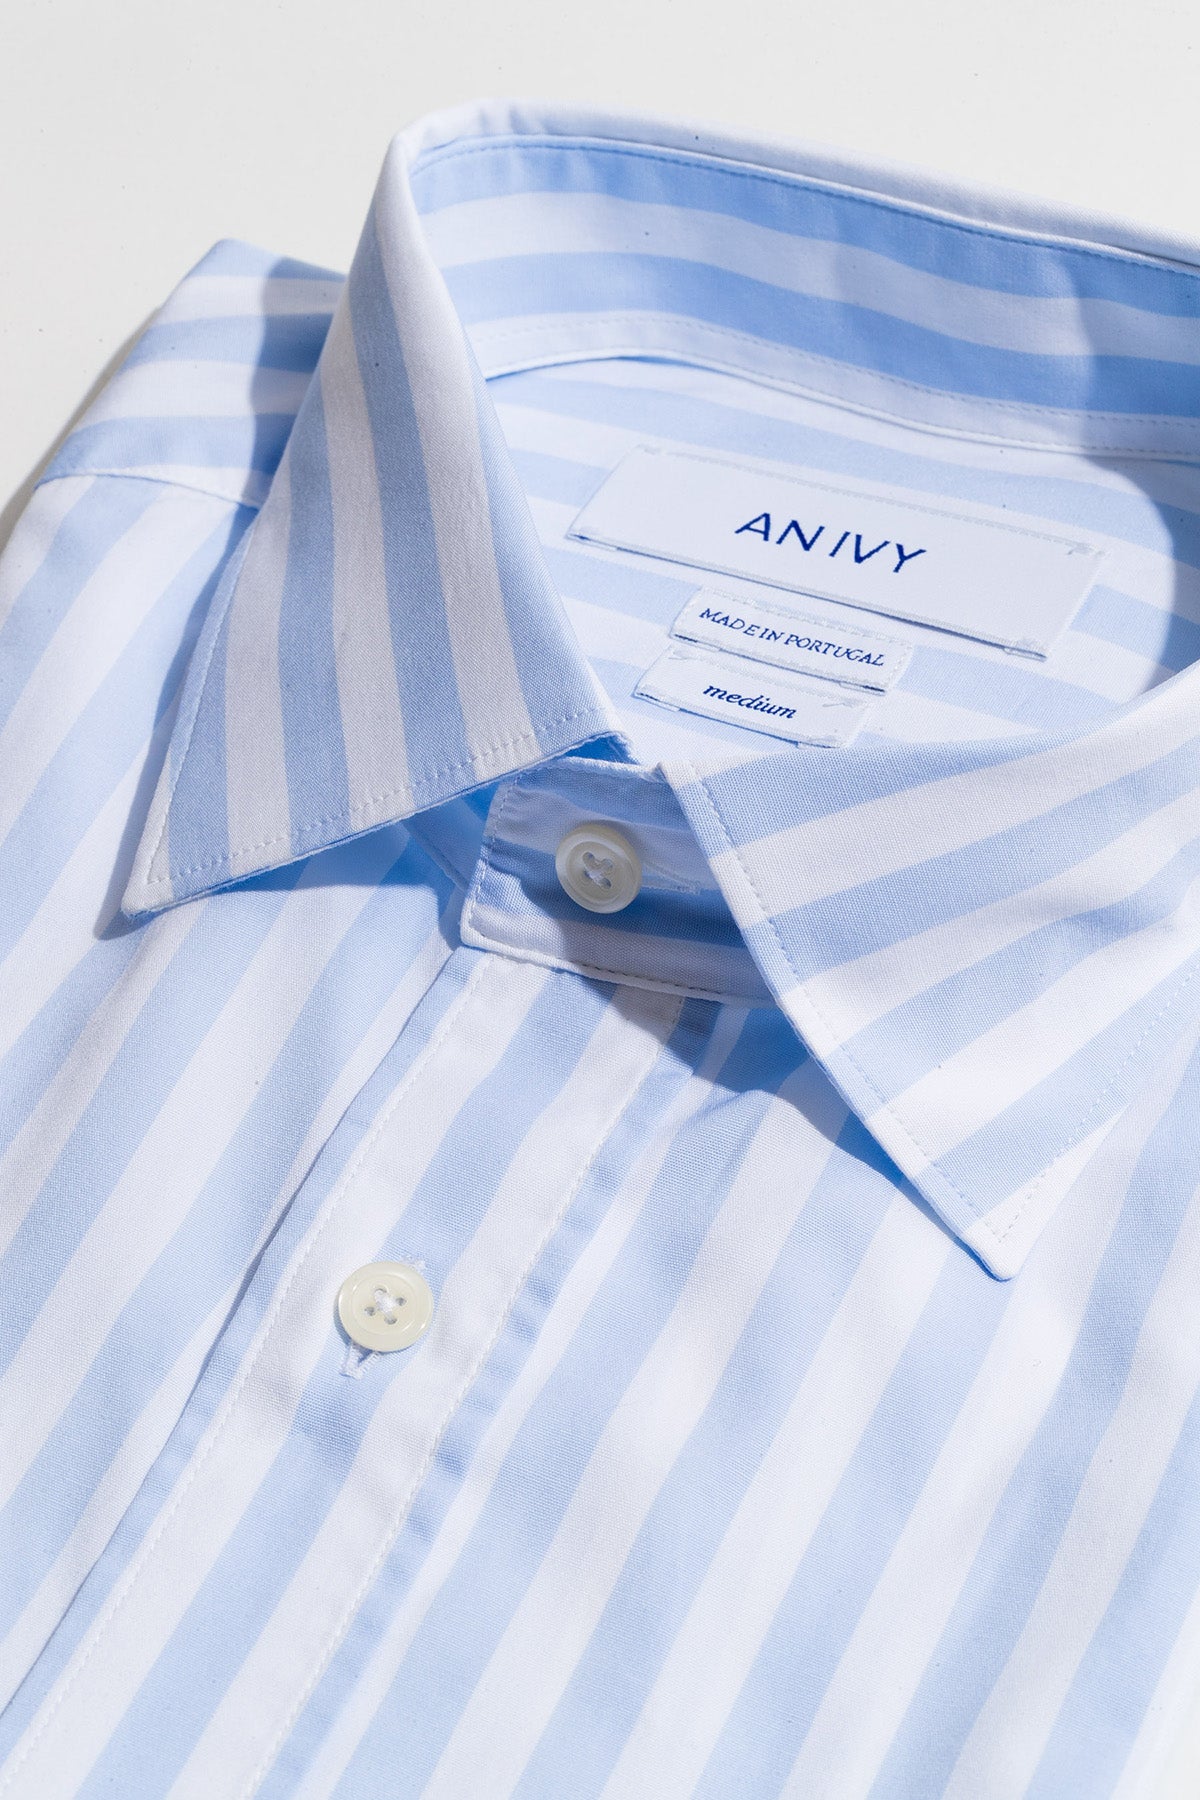 Lav aftensmad Oh Milepæl Blue Striped Cutaway Shirt – AN IVY